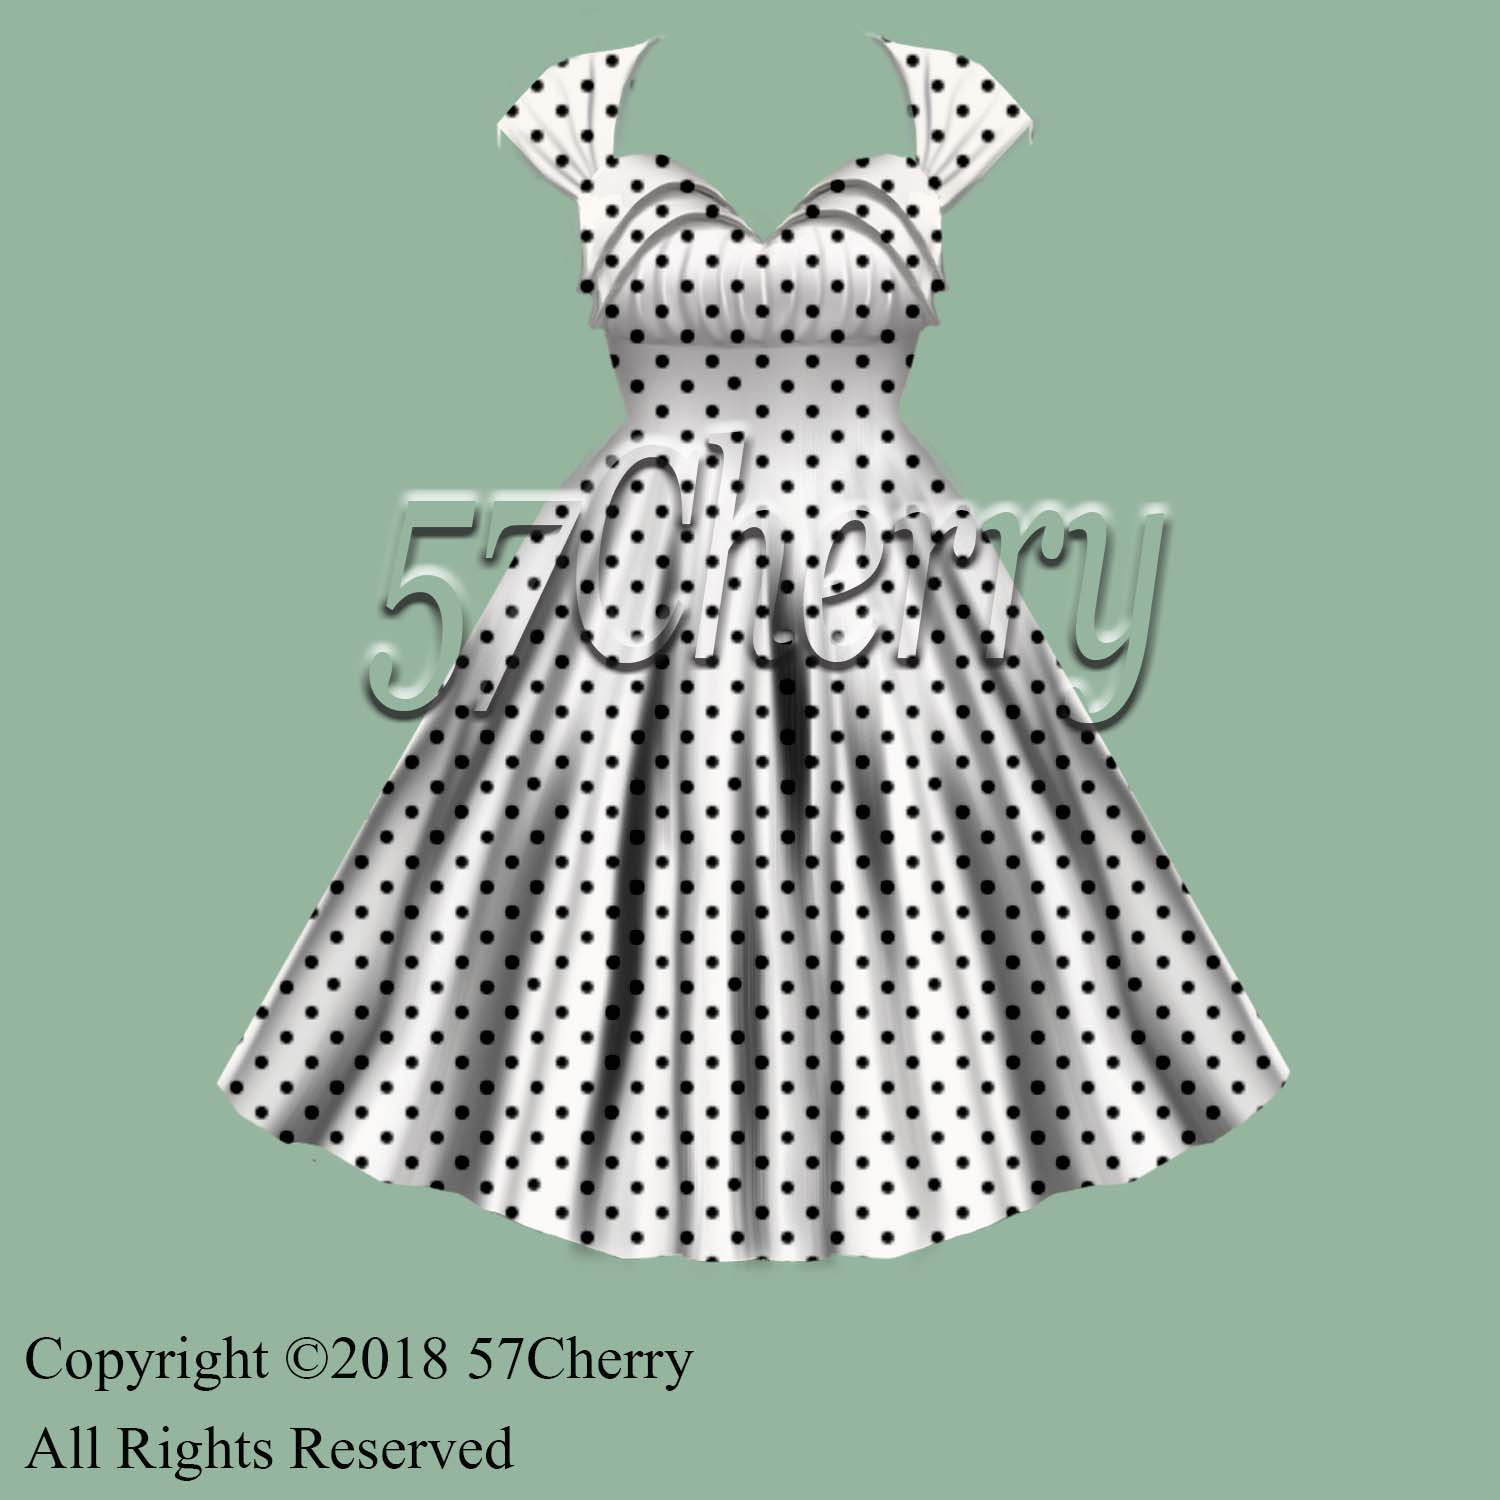 57cherry: New Summer Retro Dress Designs